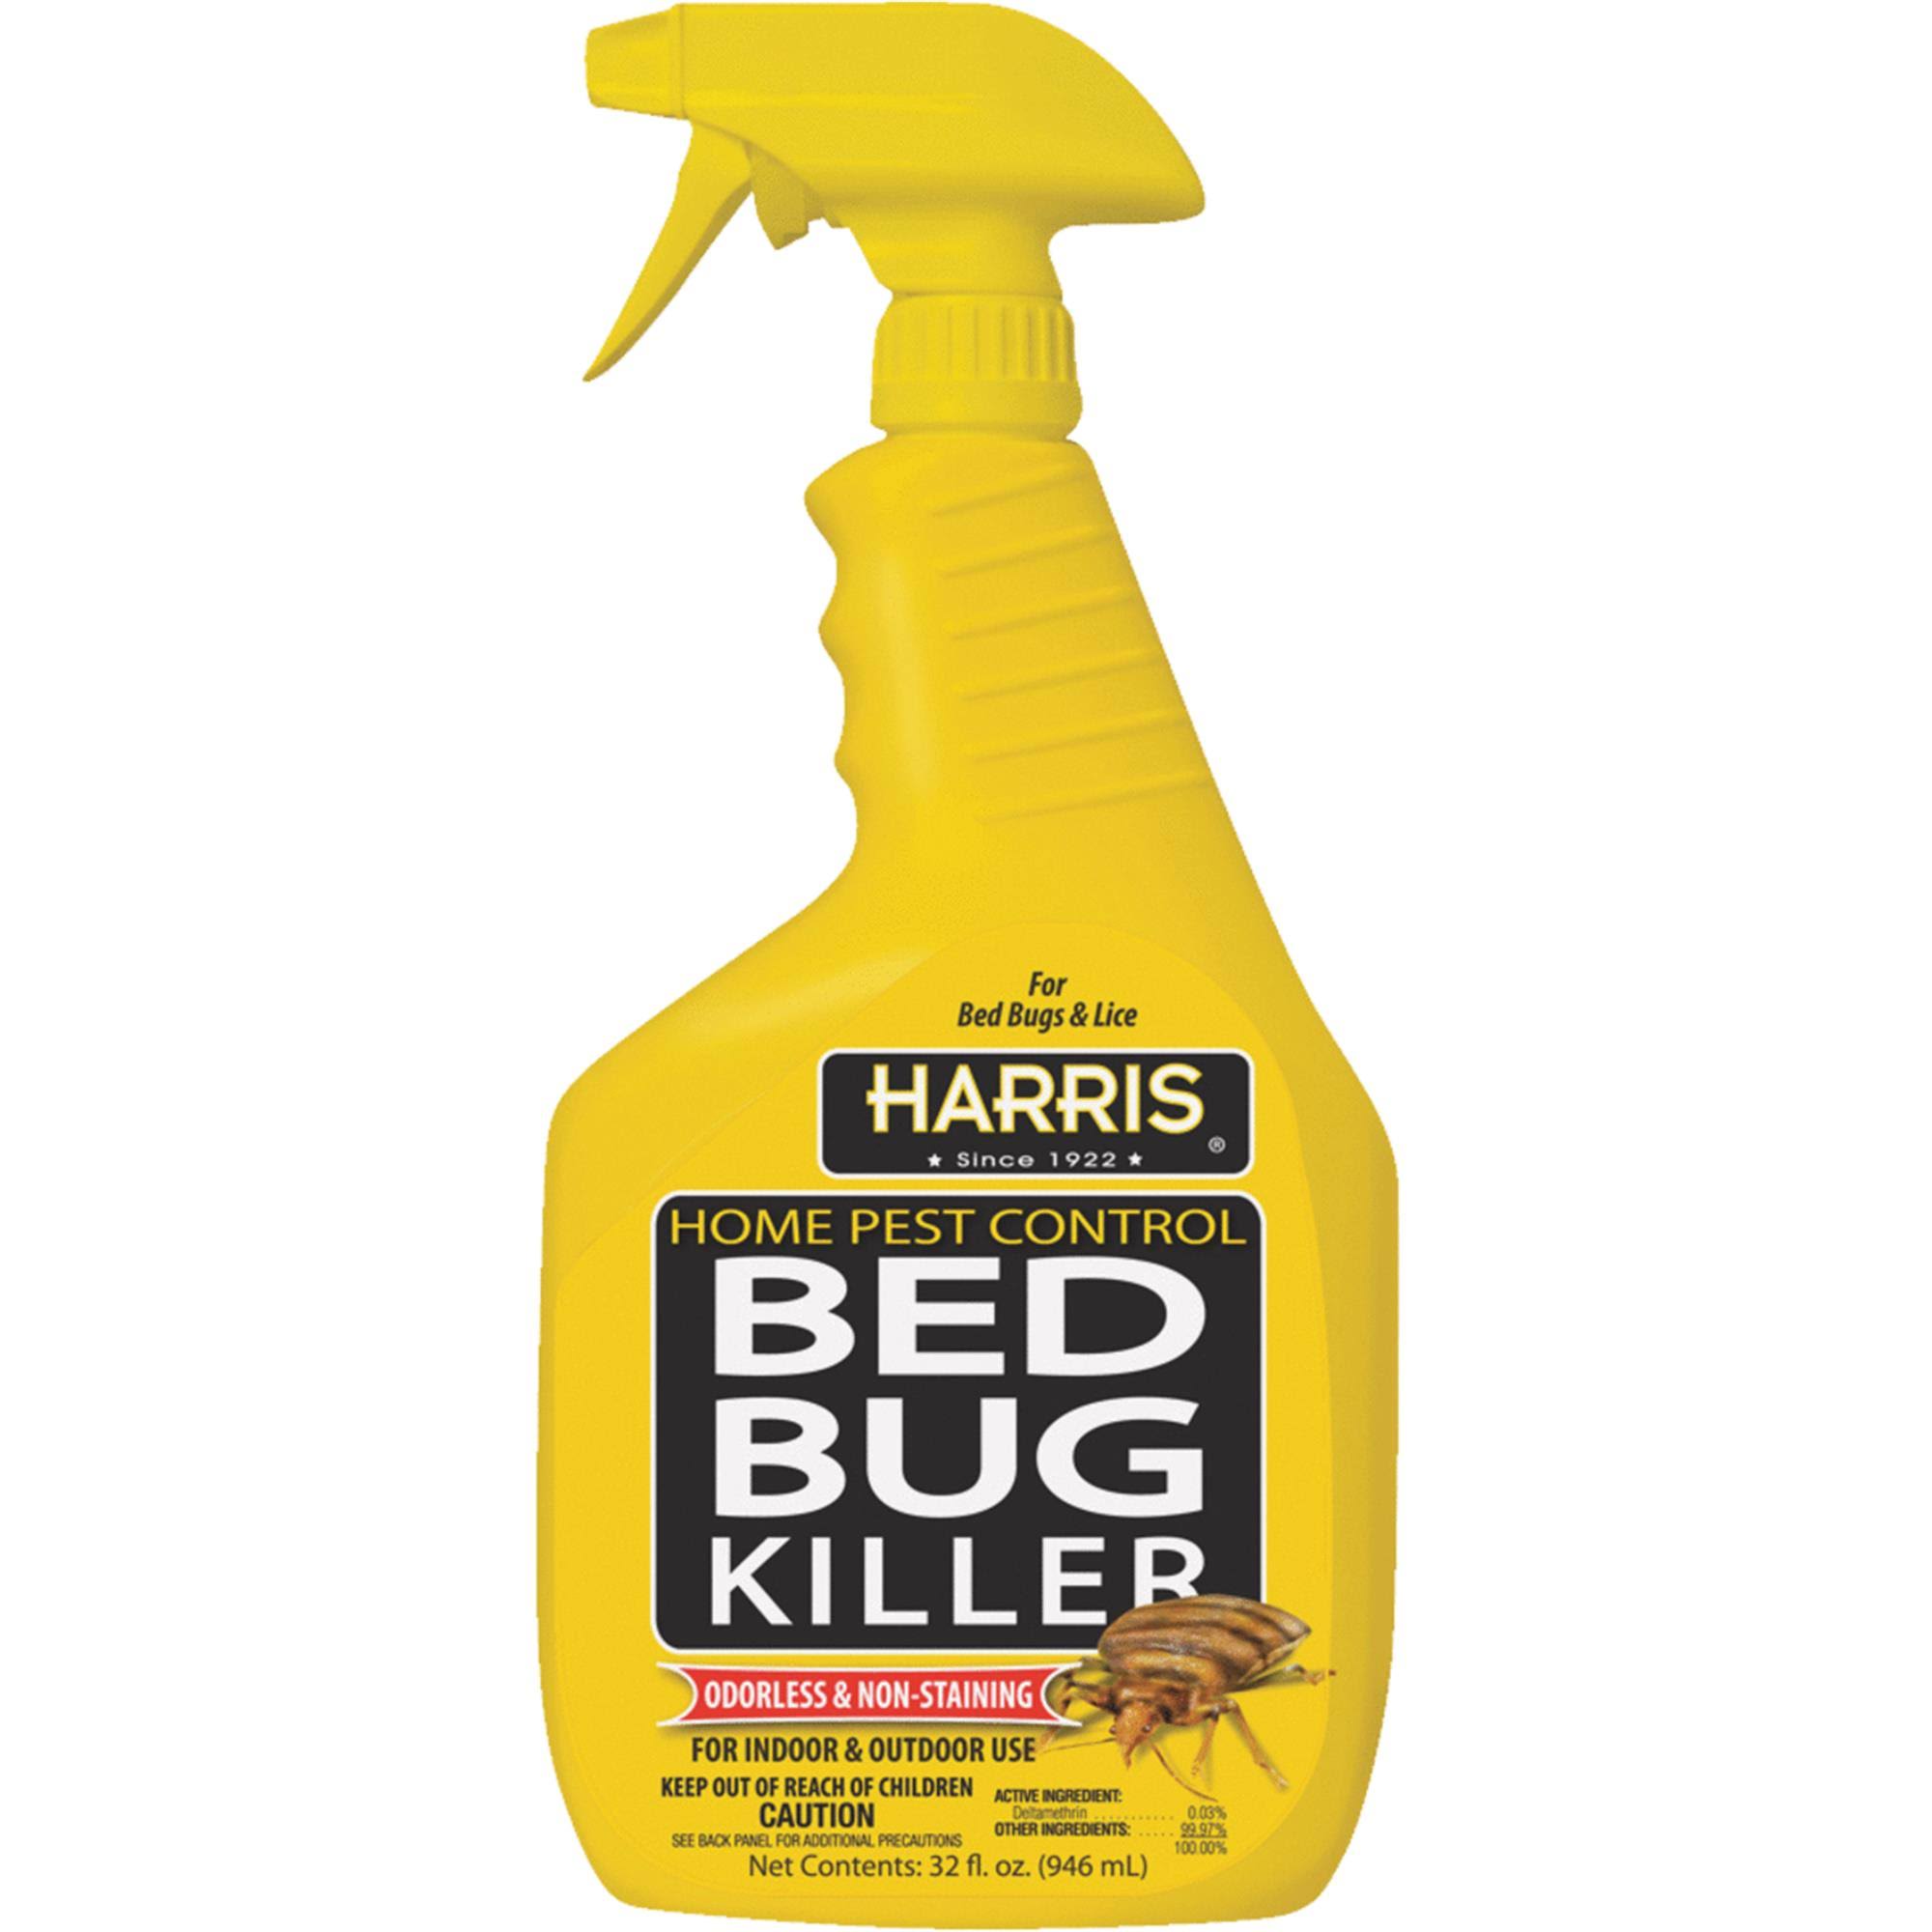 Harris Home Pest Control Bed Bug Killer - 1 quart